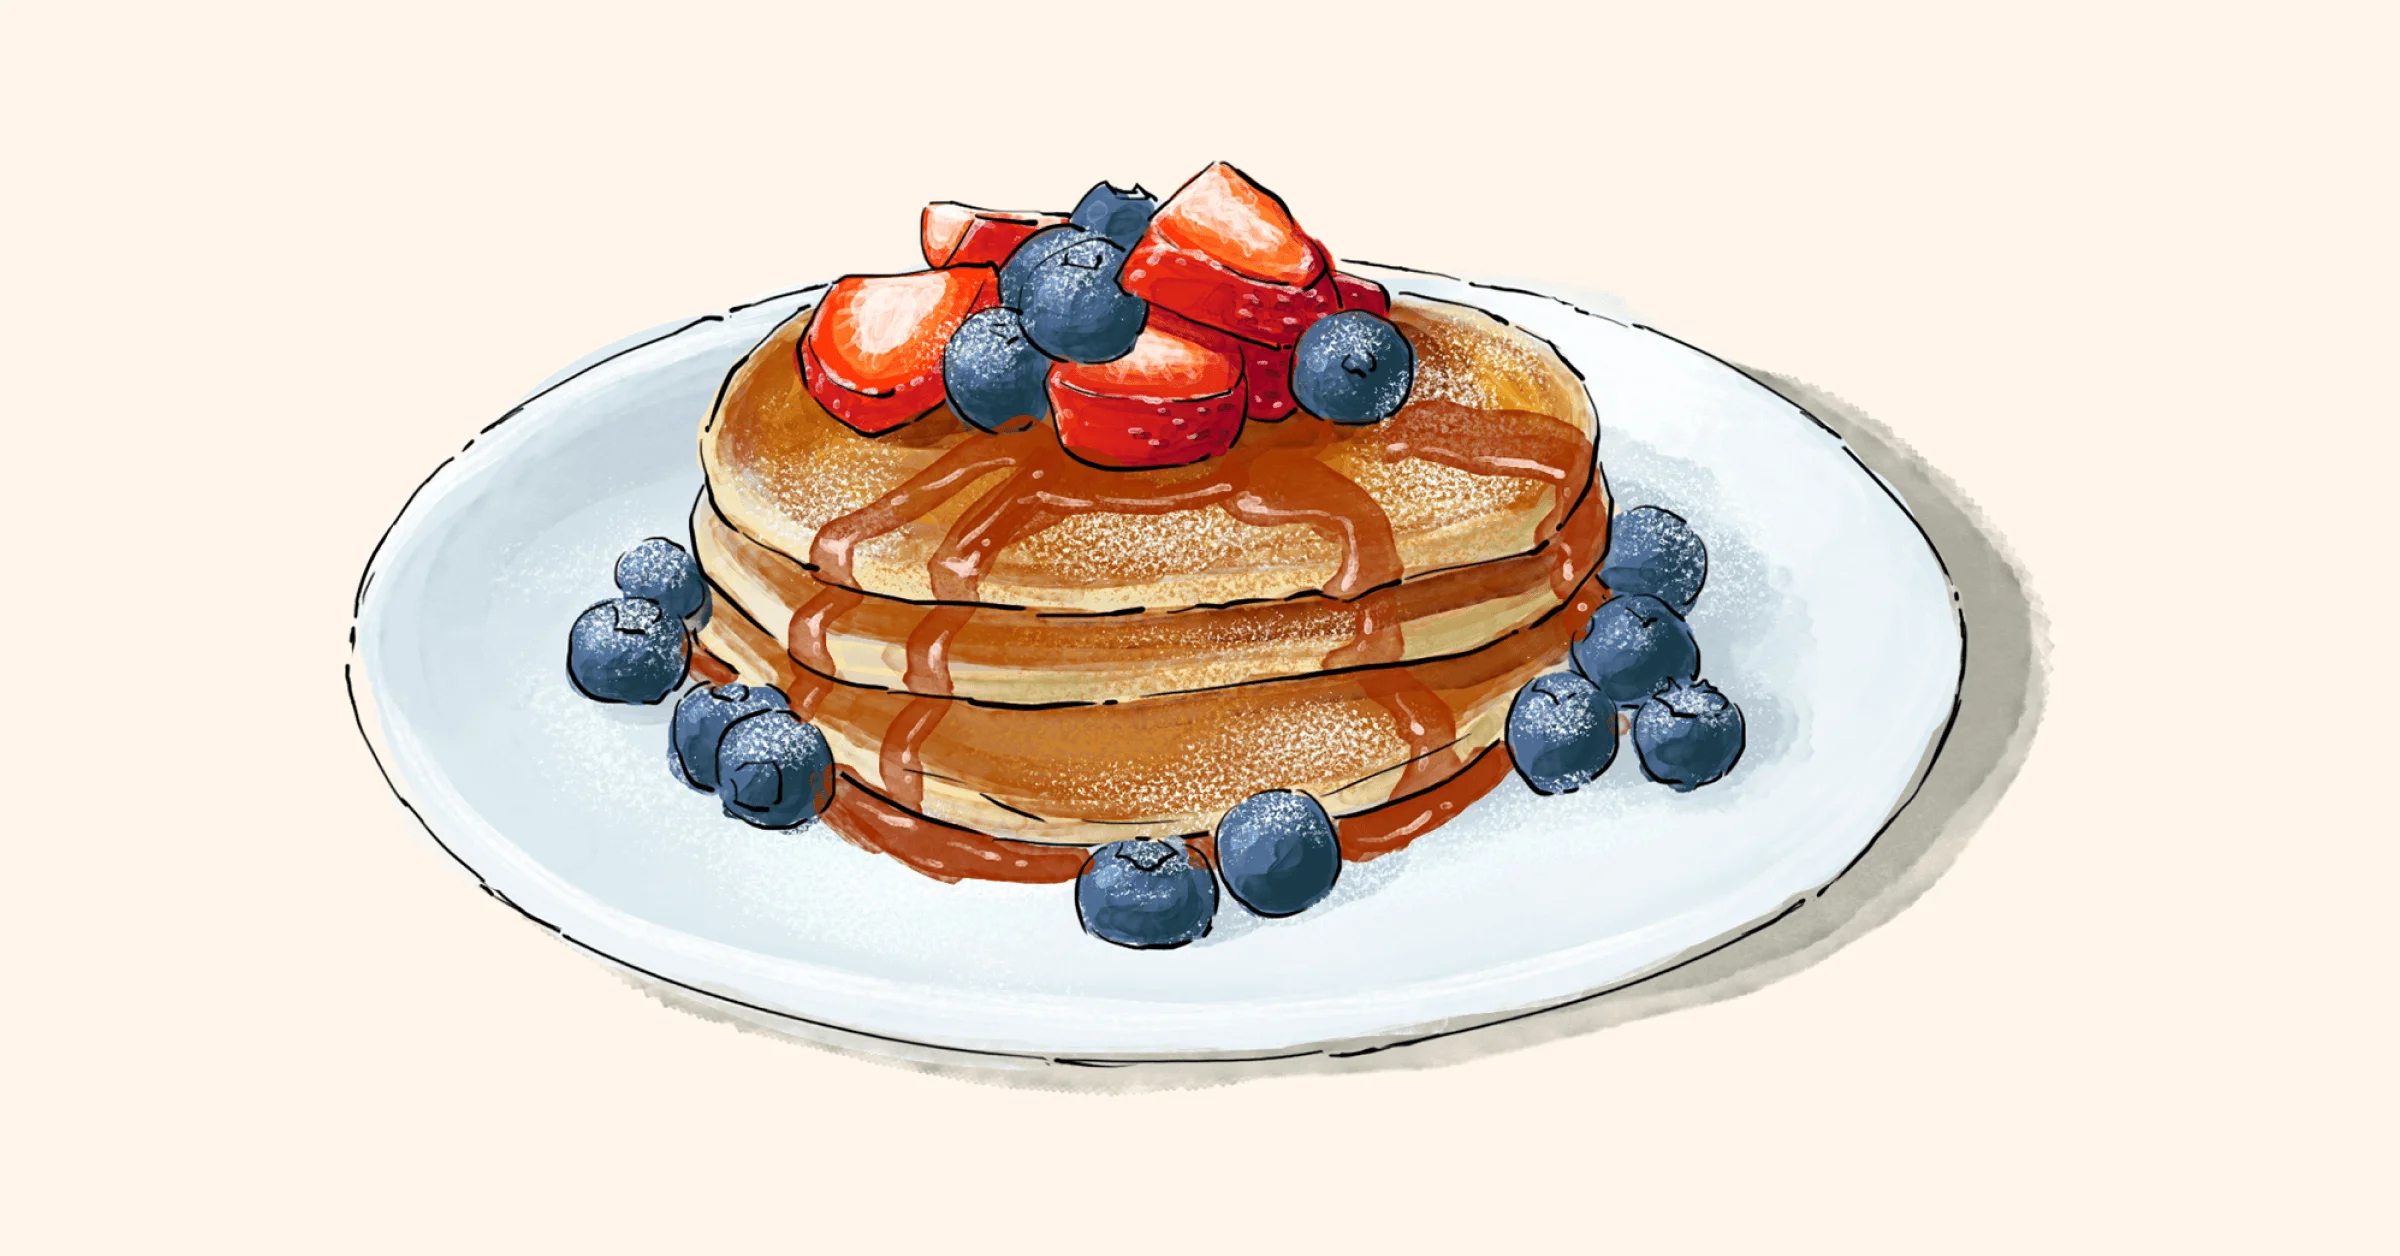 Illustration of The New Stack “Short Stack” Vegan Pancakes